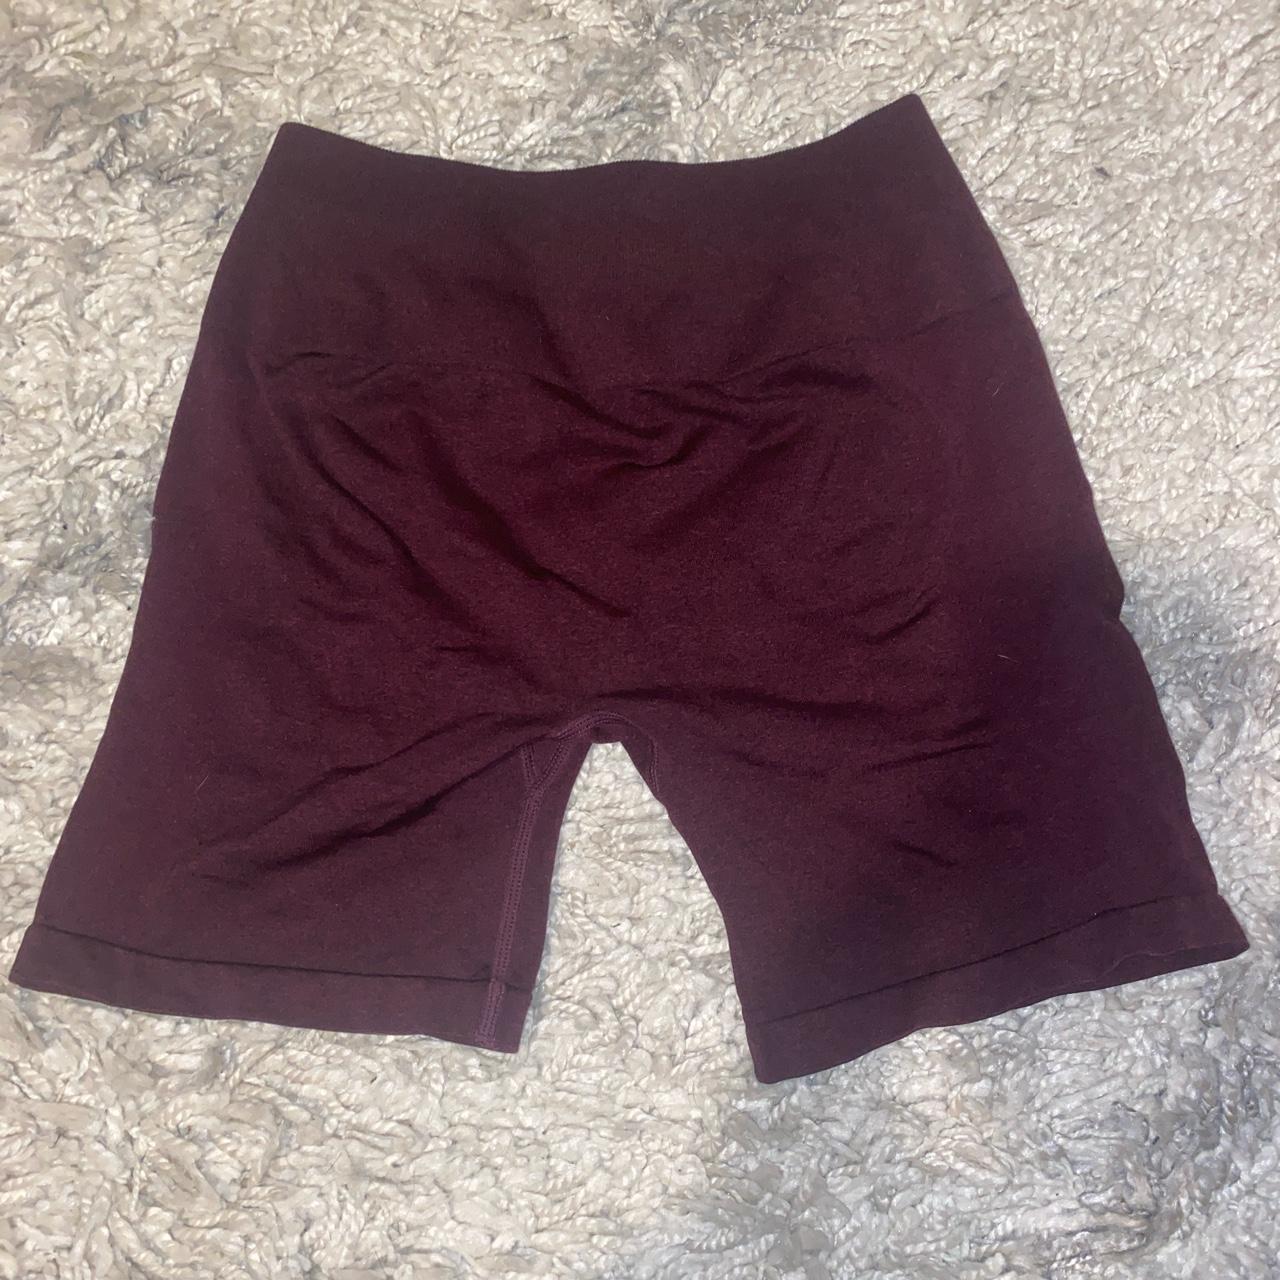 Aurola gym shorts Size L Tagged for exposure! - Depop